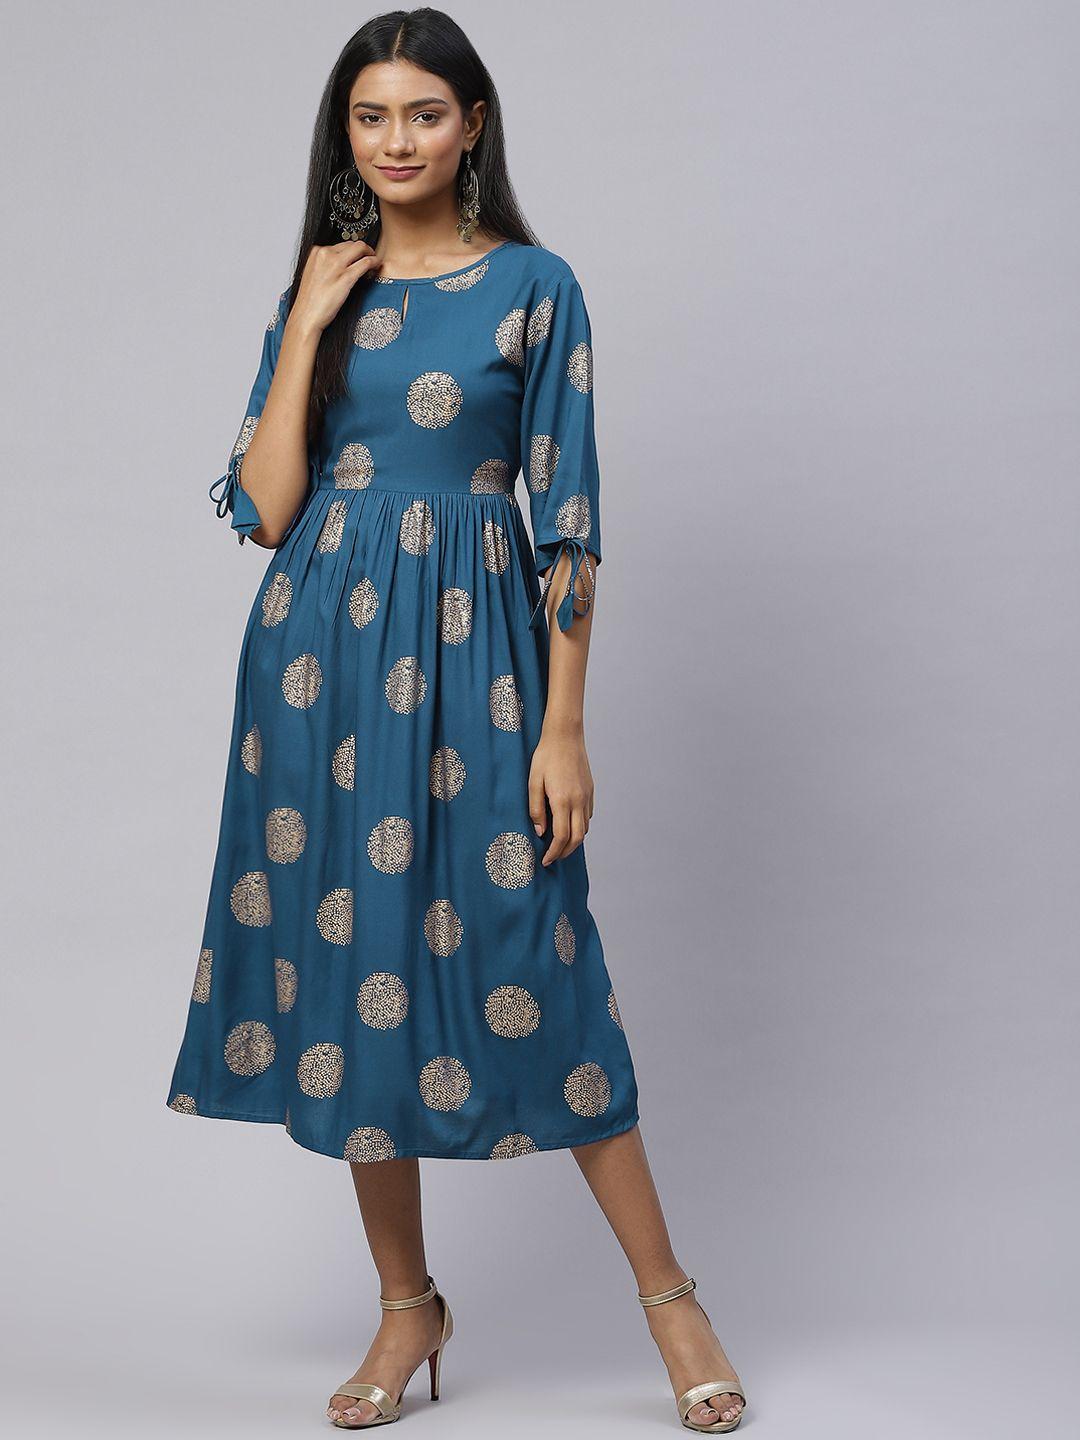 svarchi-teal-blue-&-golden-ethnic-motifs-ethnic-a-line-midi-dress